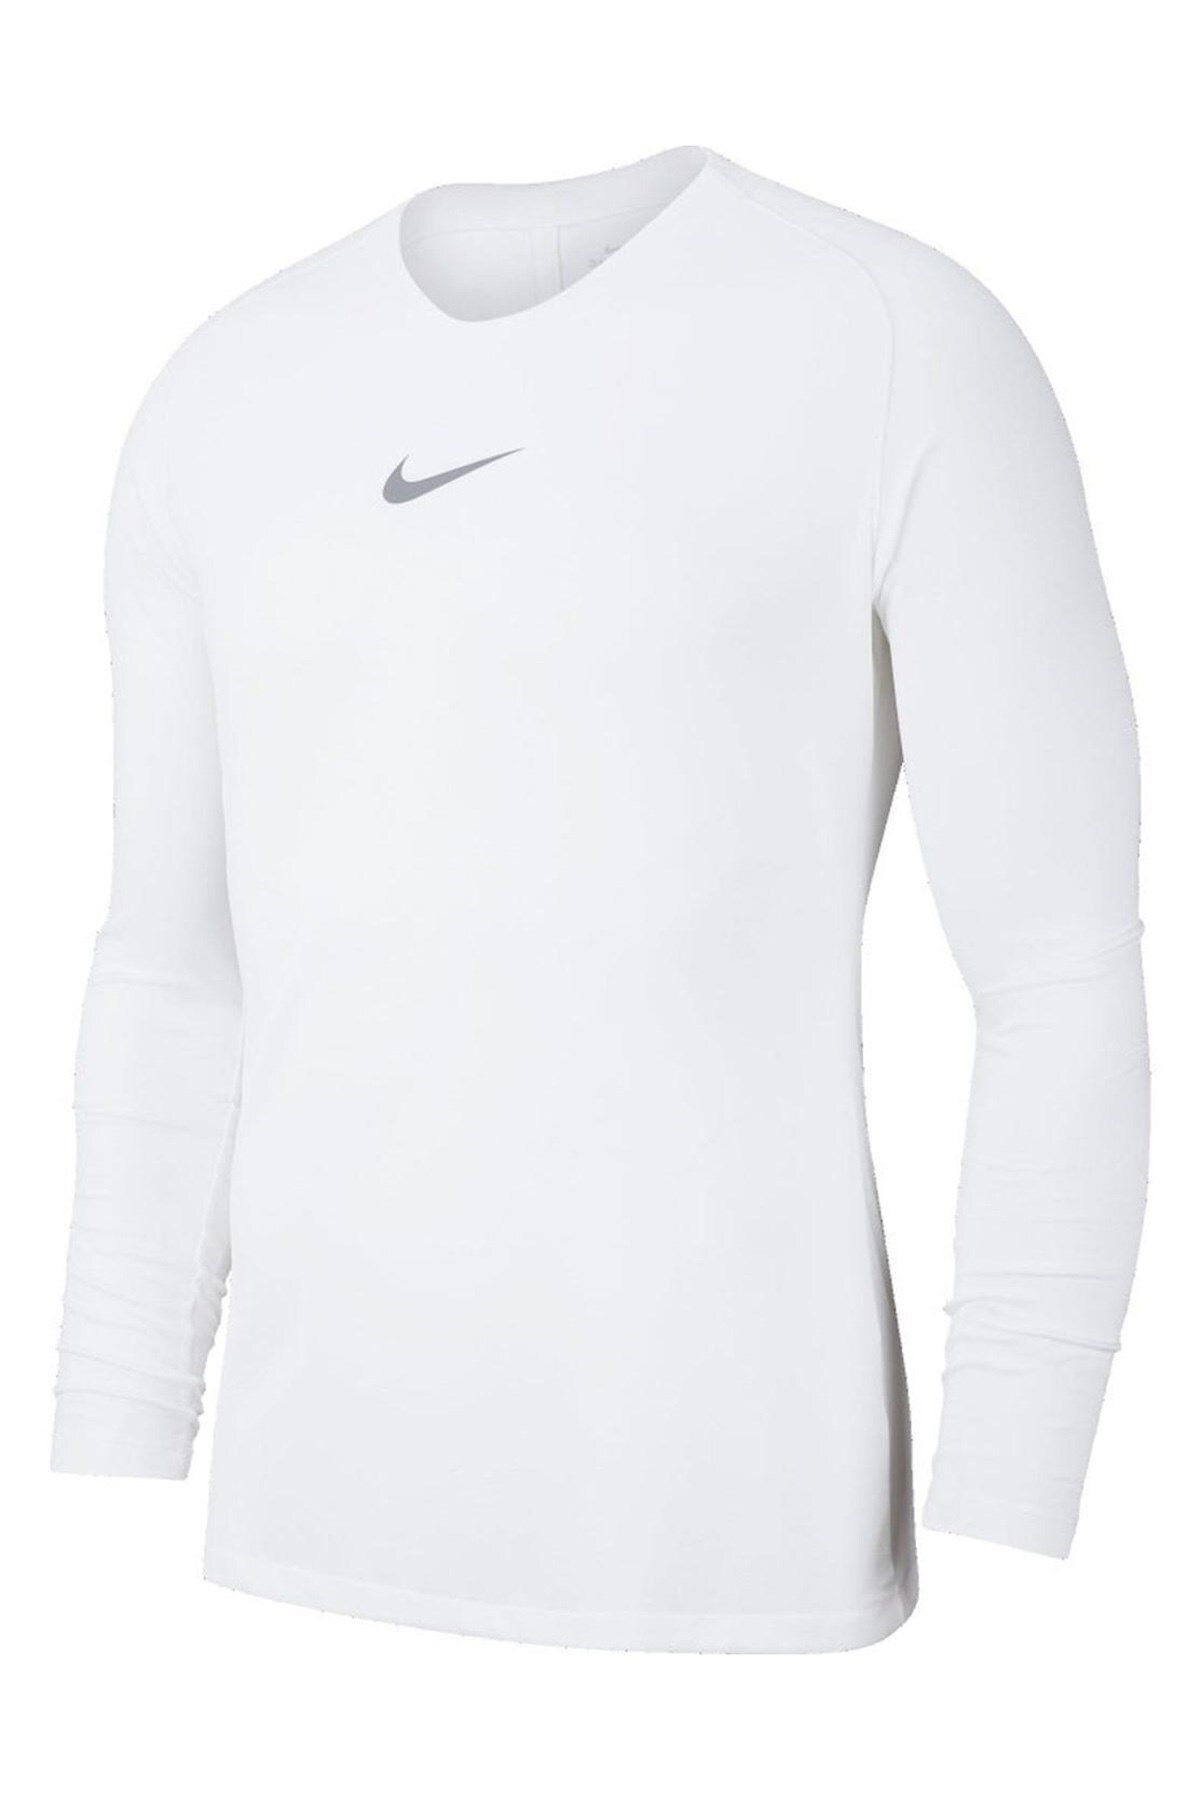 Nike Av2611-100 Dry Park First Layer Çocuk Sweatshirt